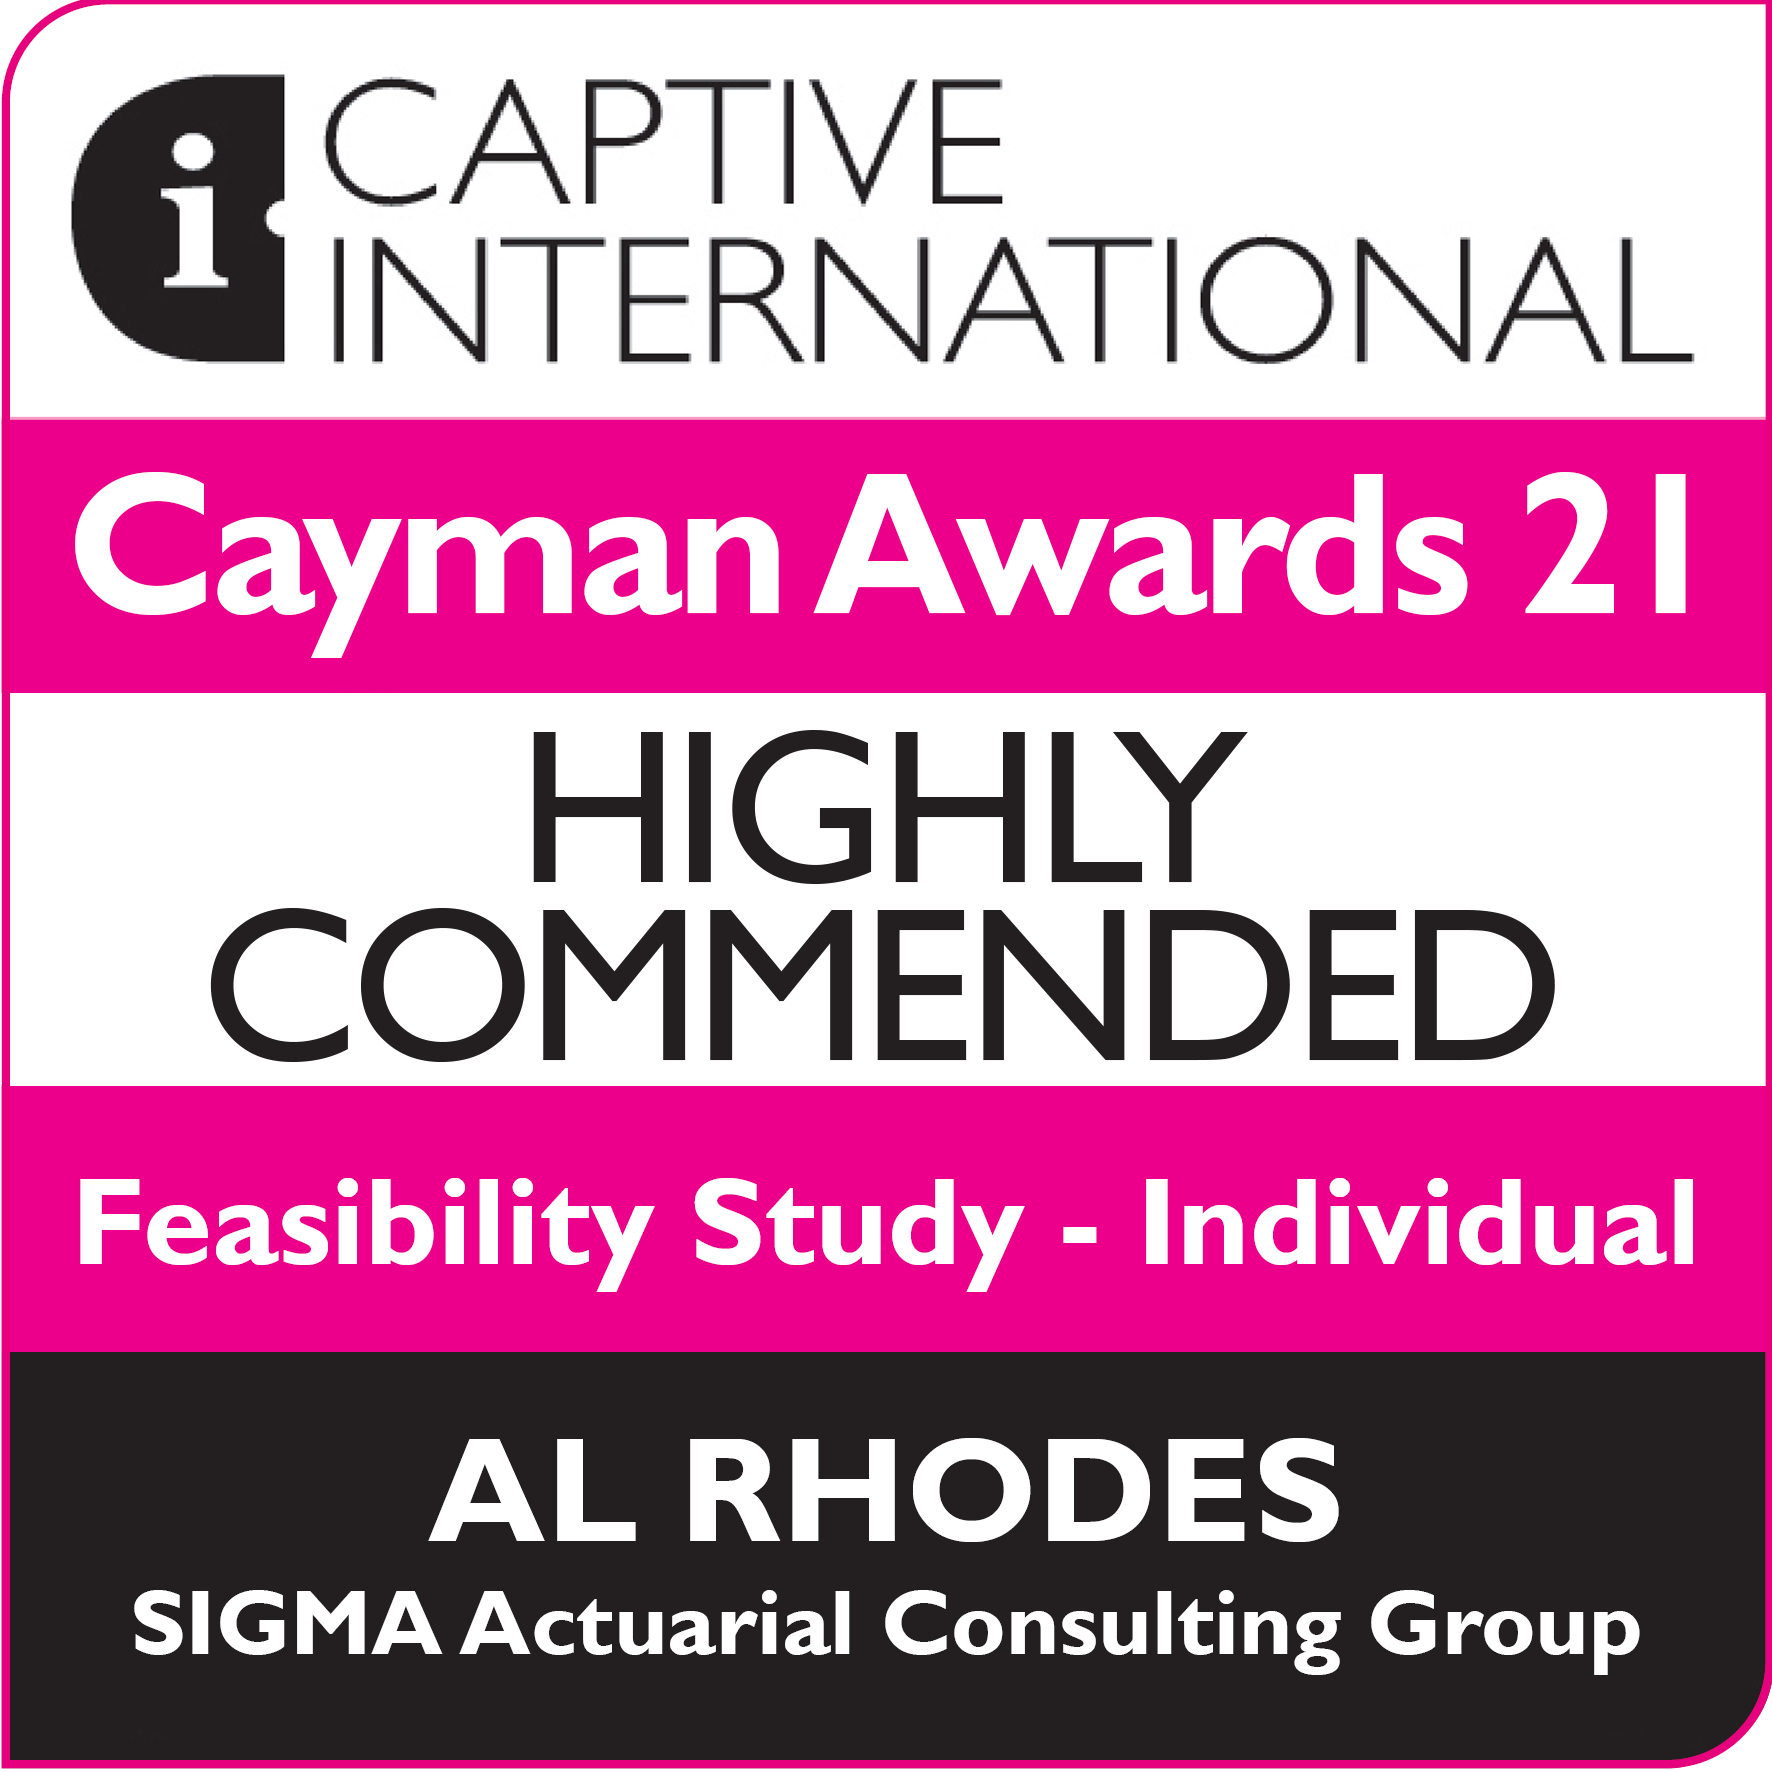 Captive International Cayman Awards Highly Commended